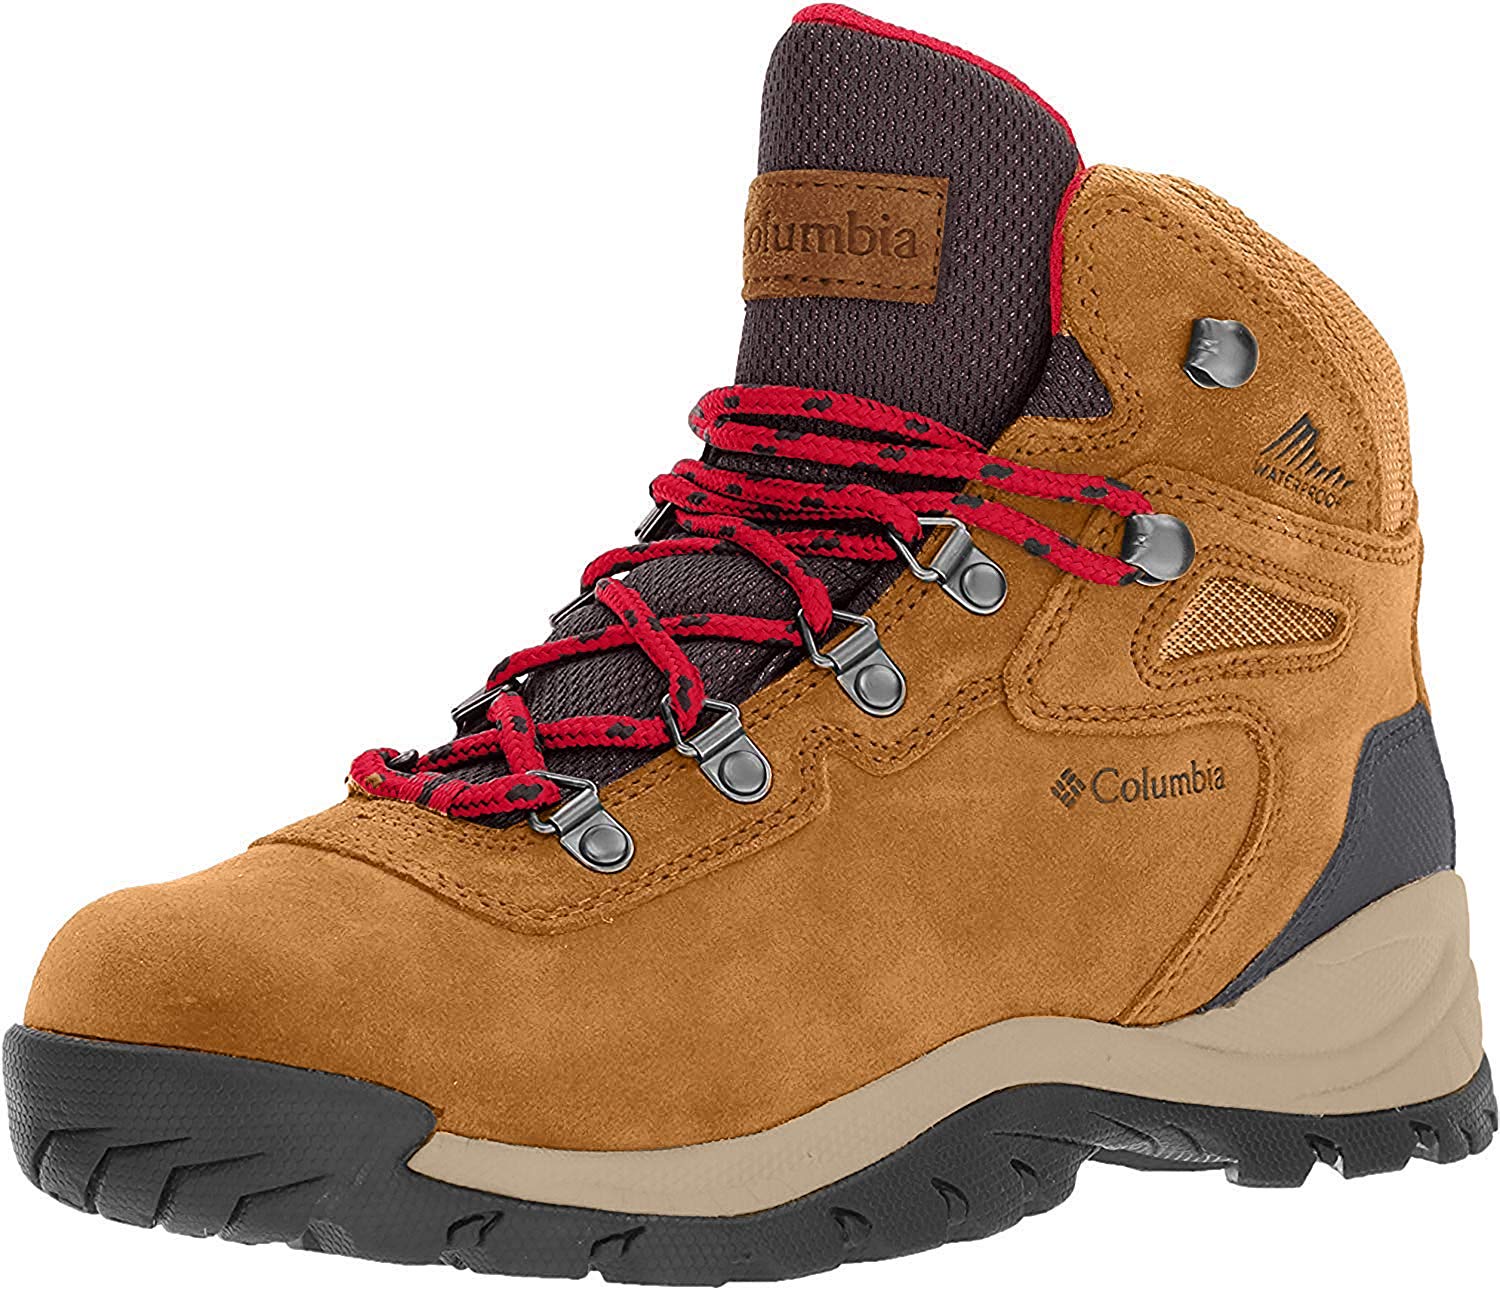 Buy > waterproof hiking boots women > in stock